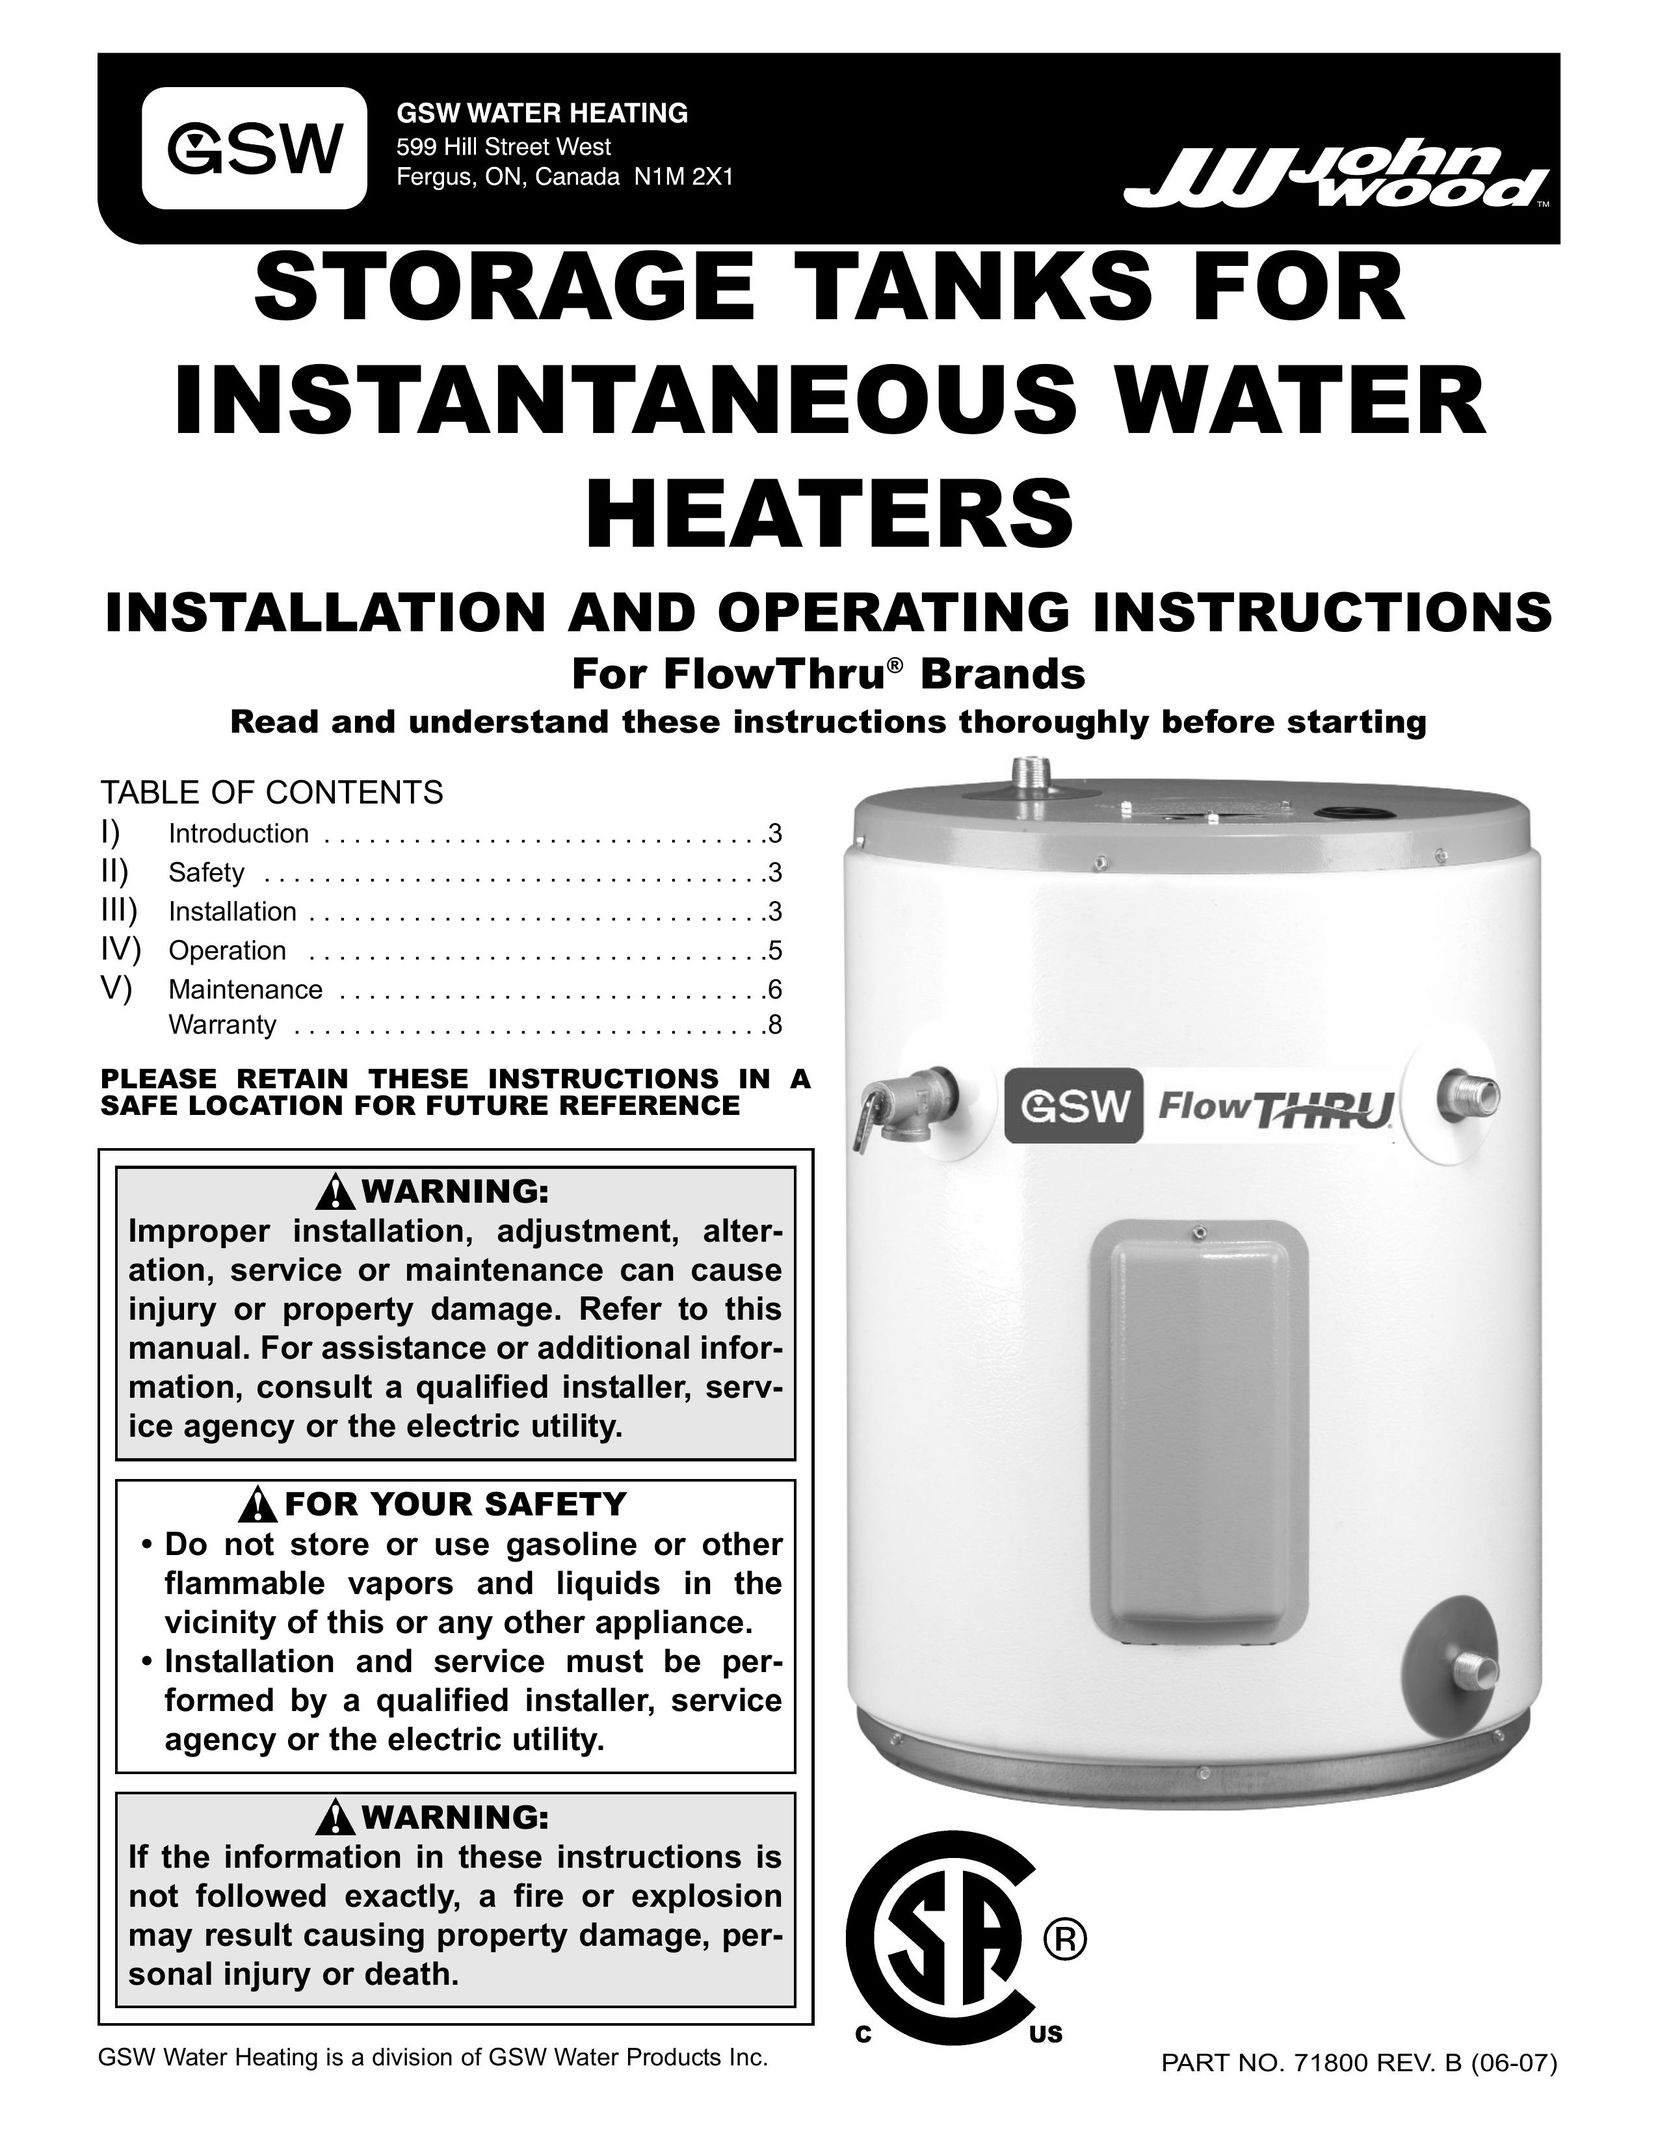 GSW FlowThru Water Heater User Manual